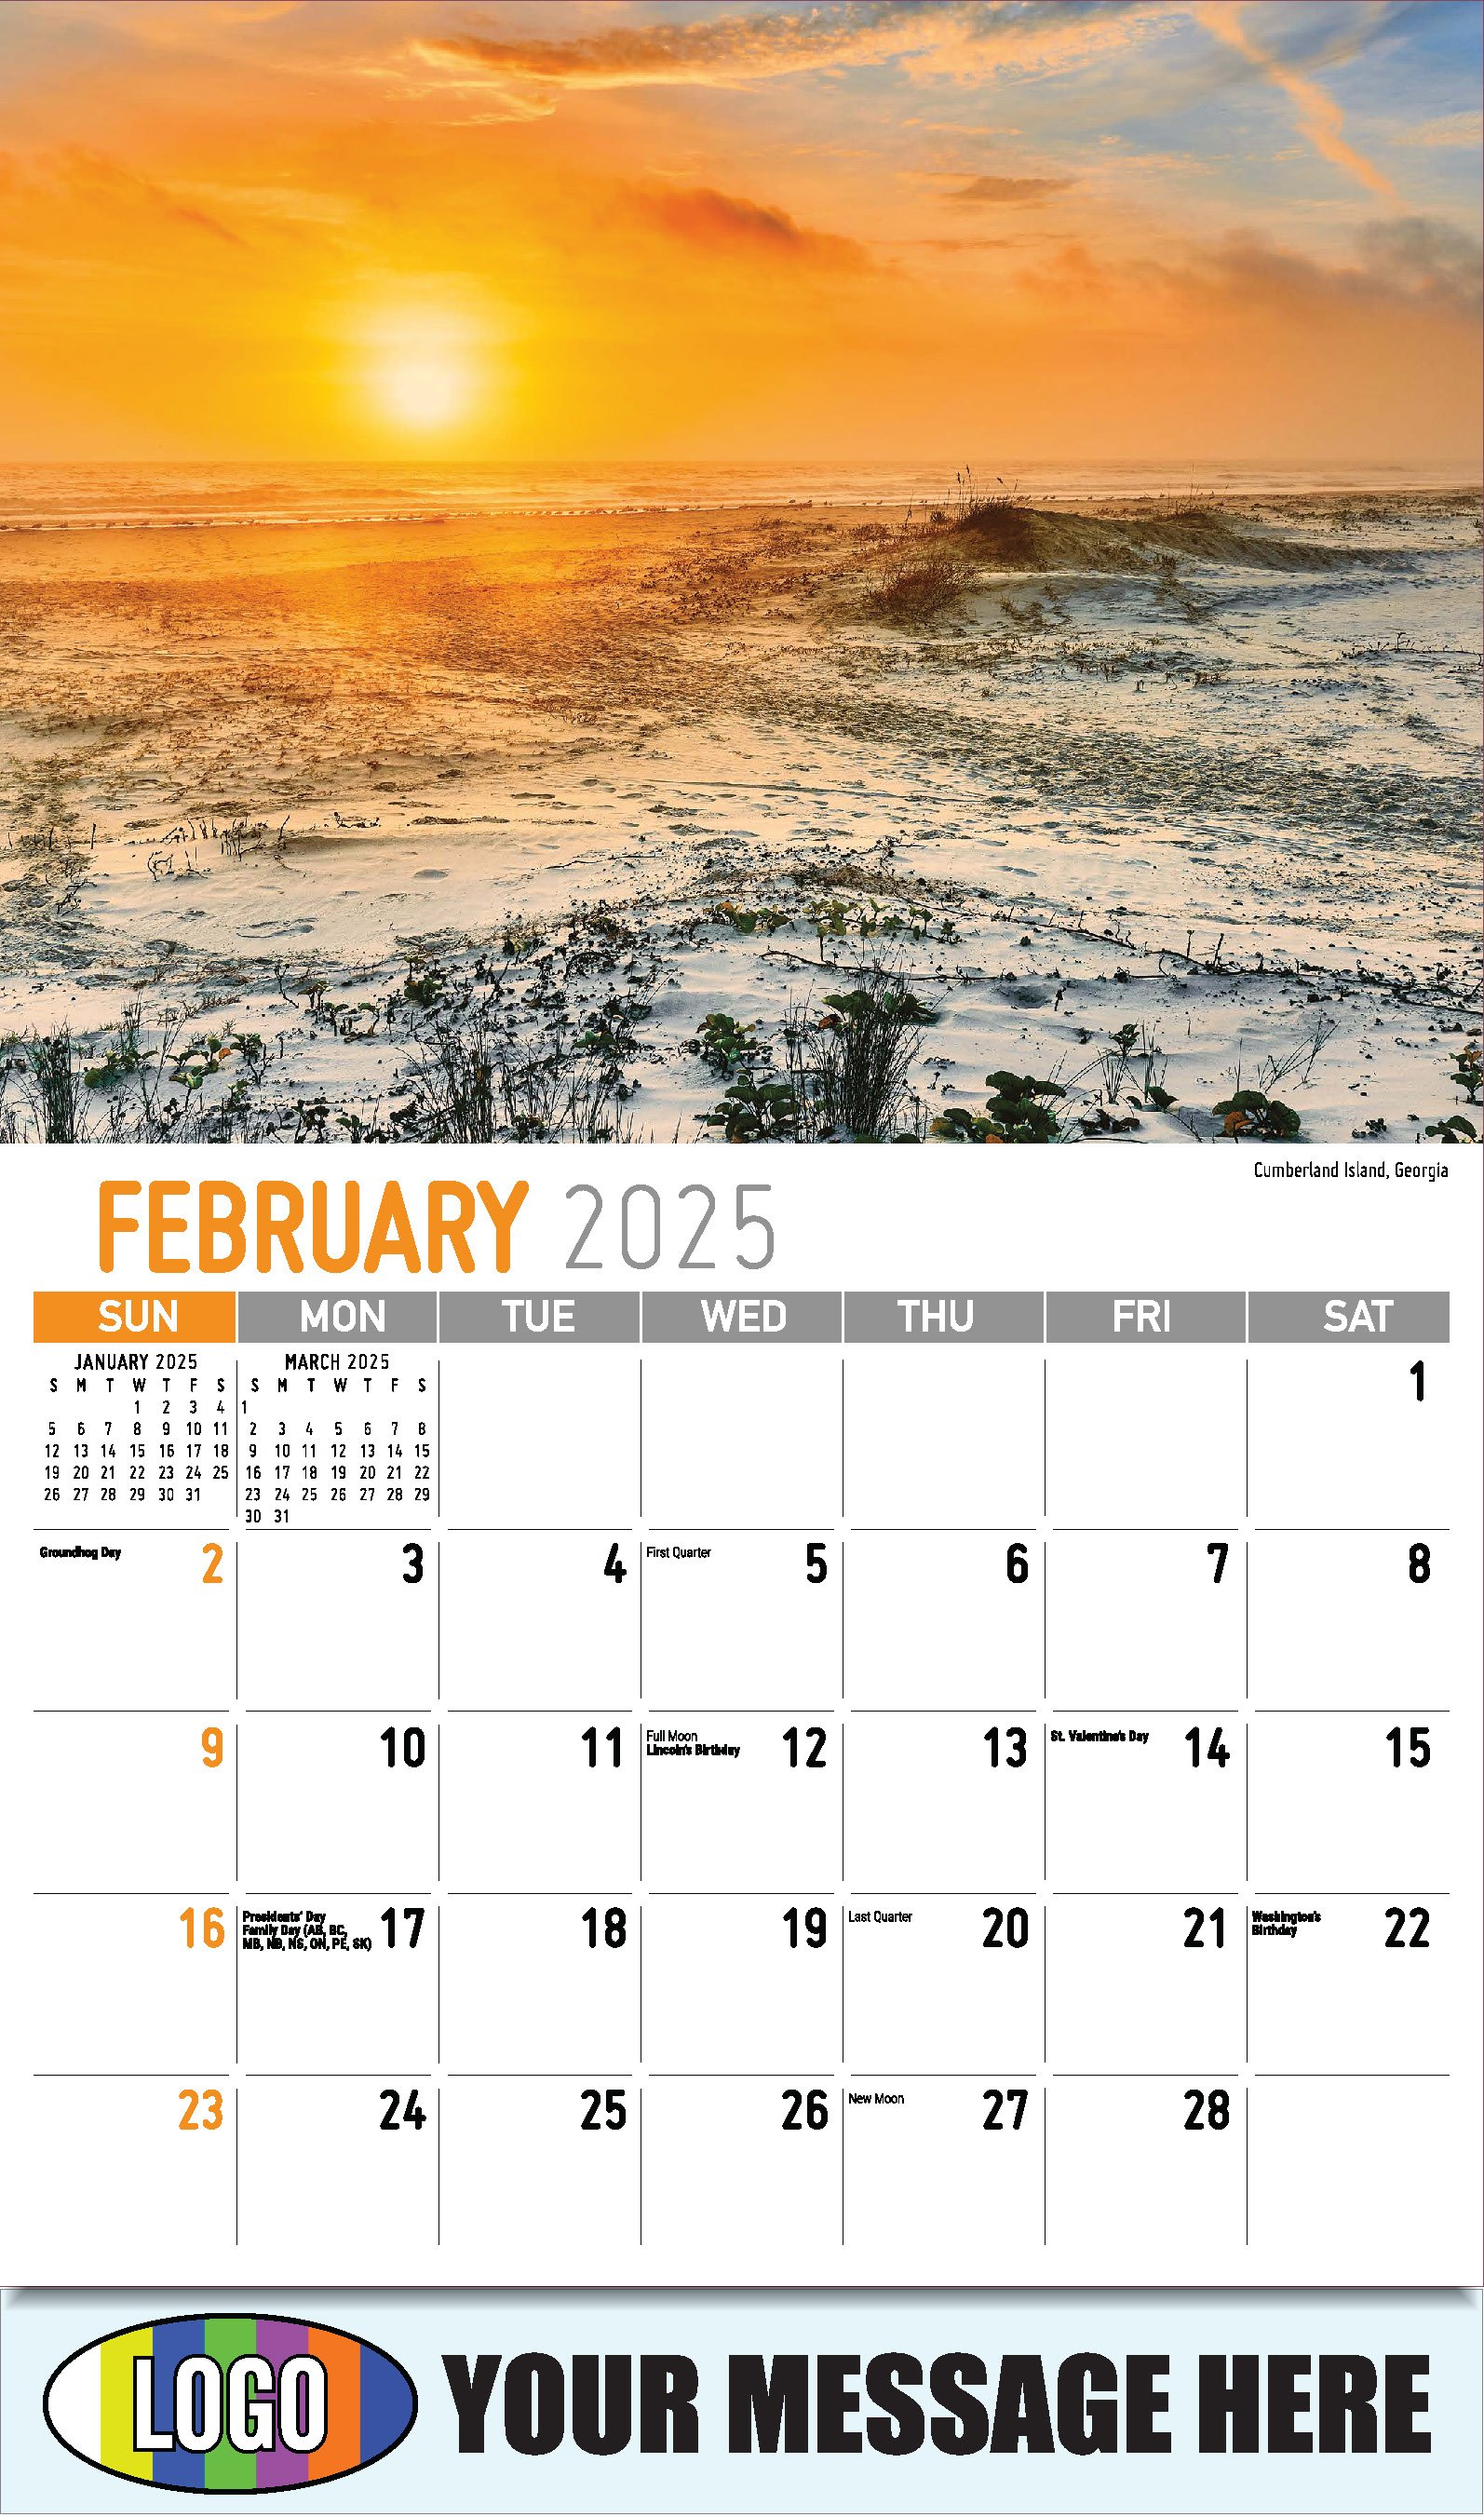 Scenes of Southeast USA 2025 Business Promo Wall Calendar - February